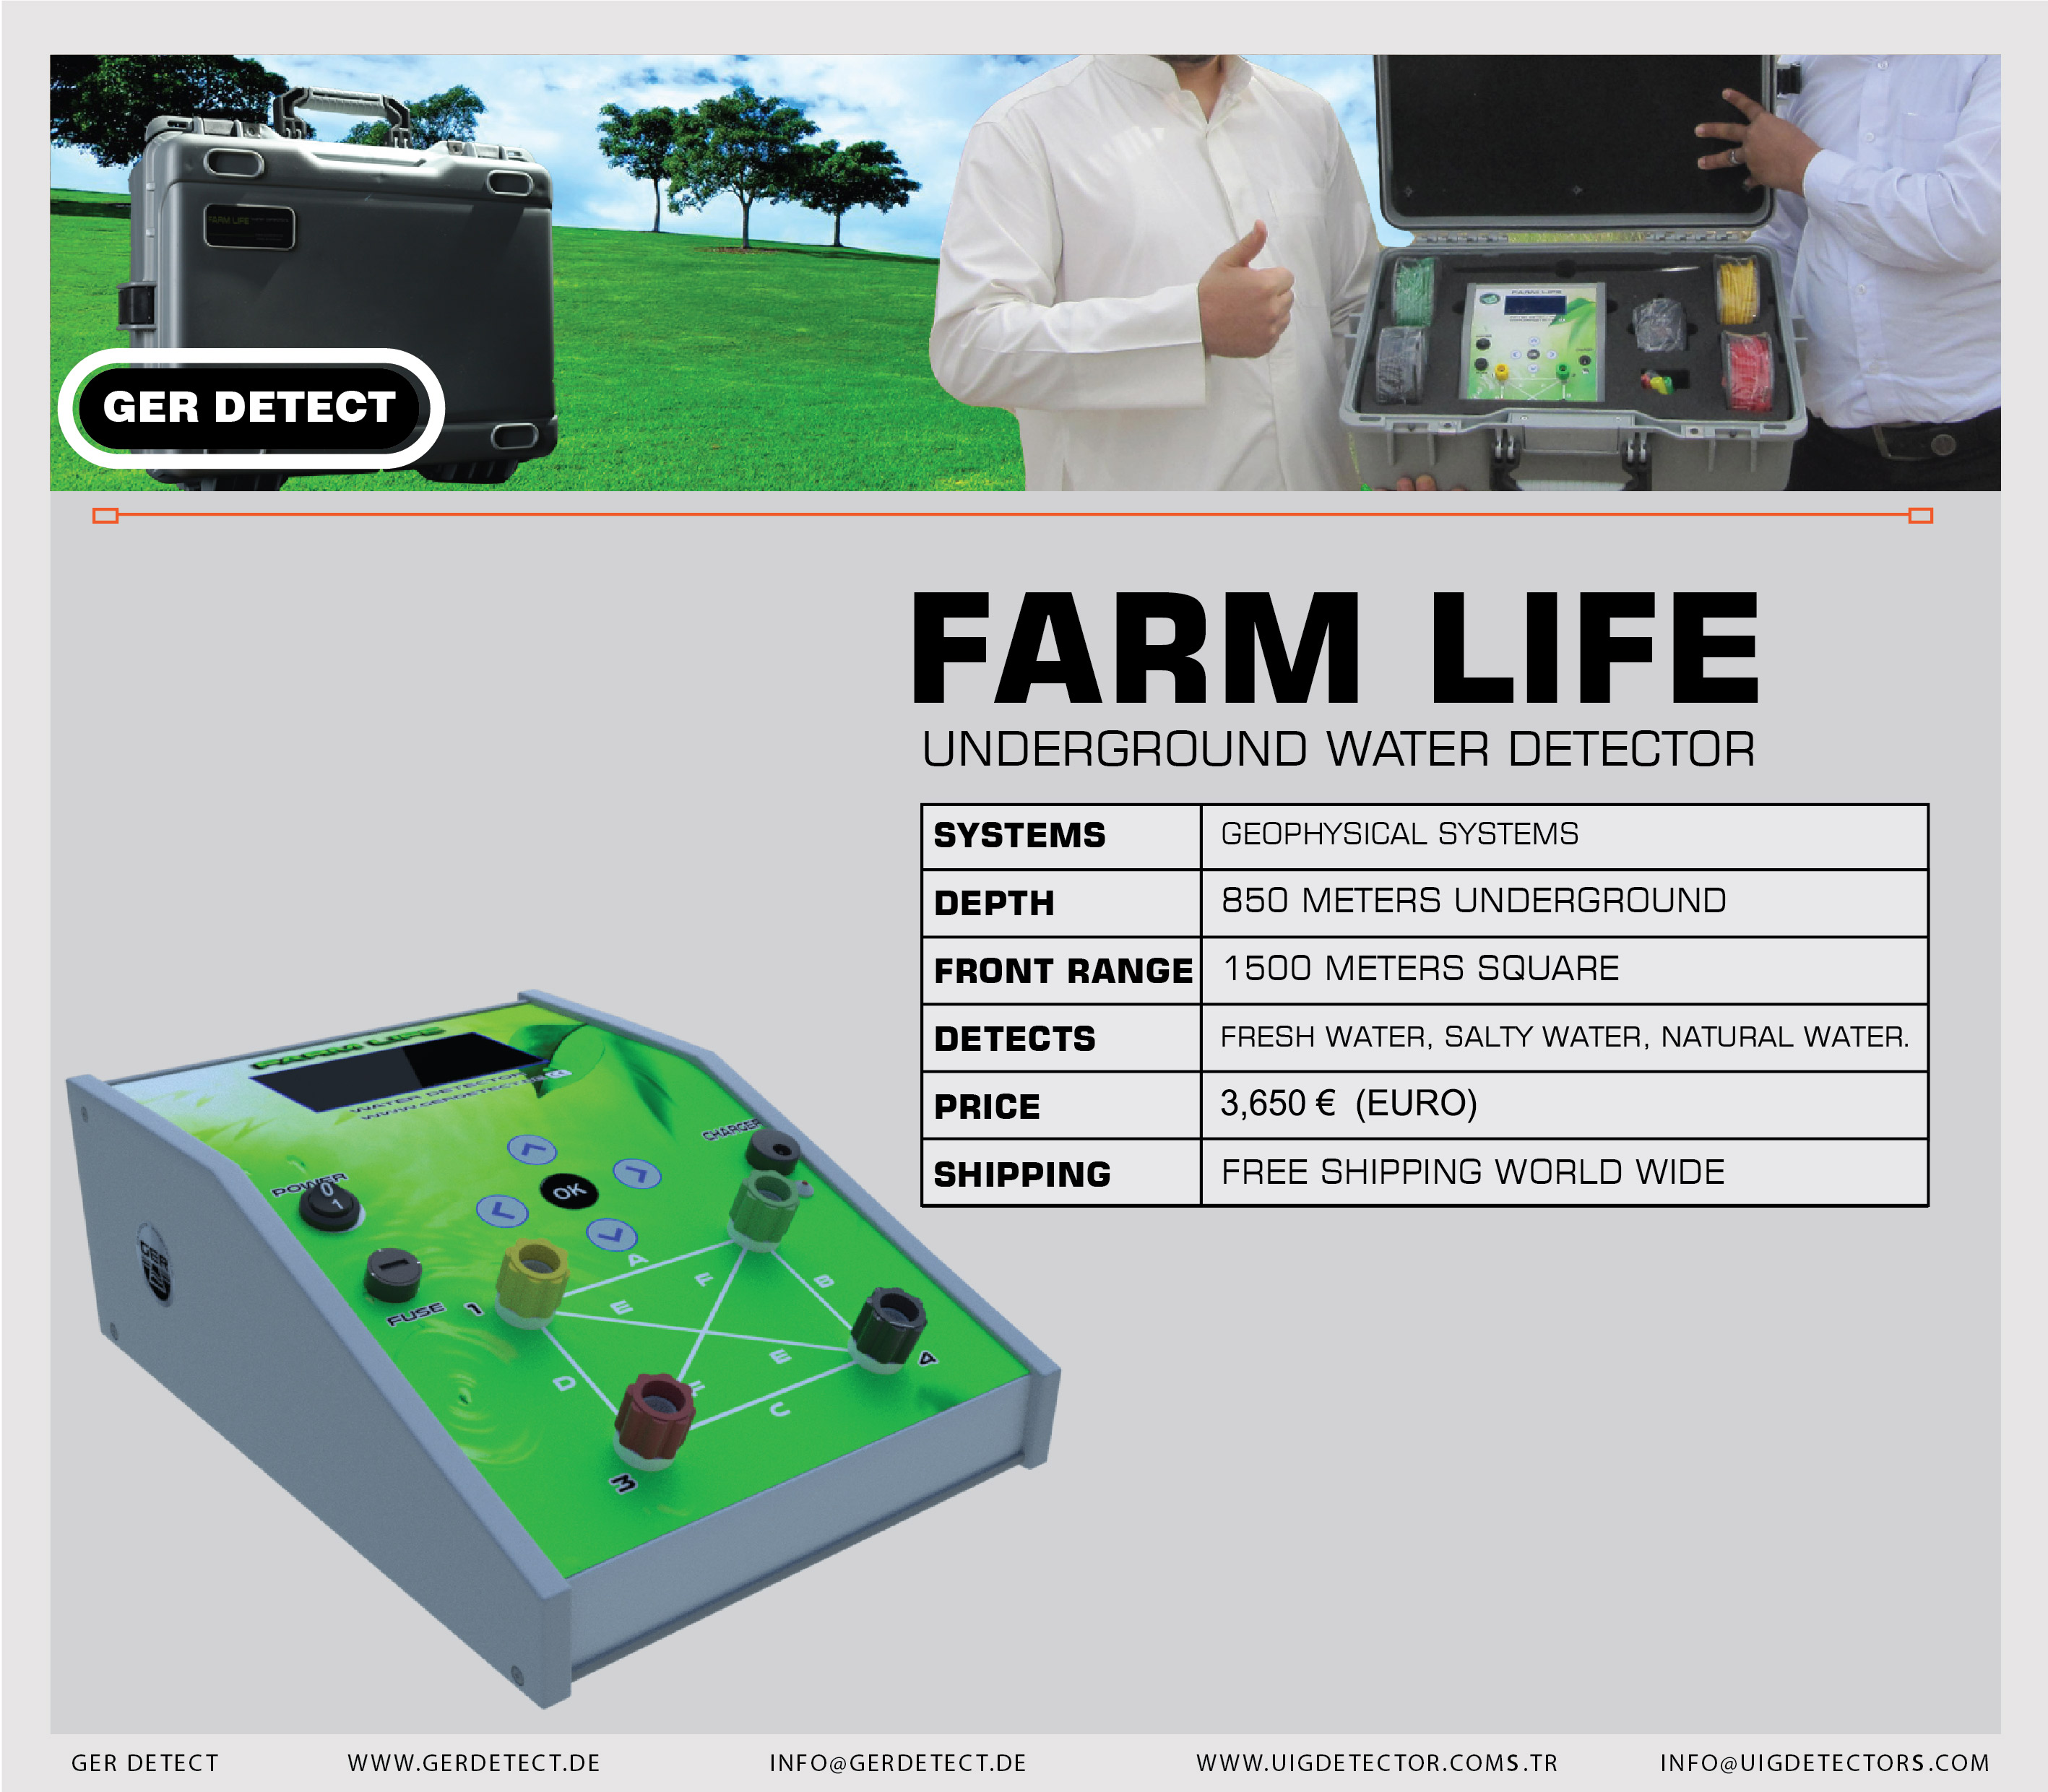 Brochure for FARM LIFE device